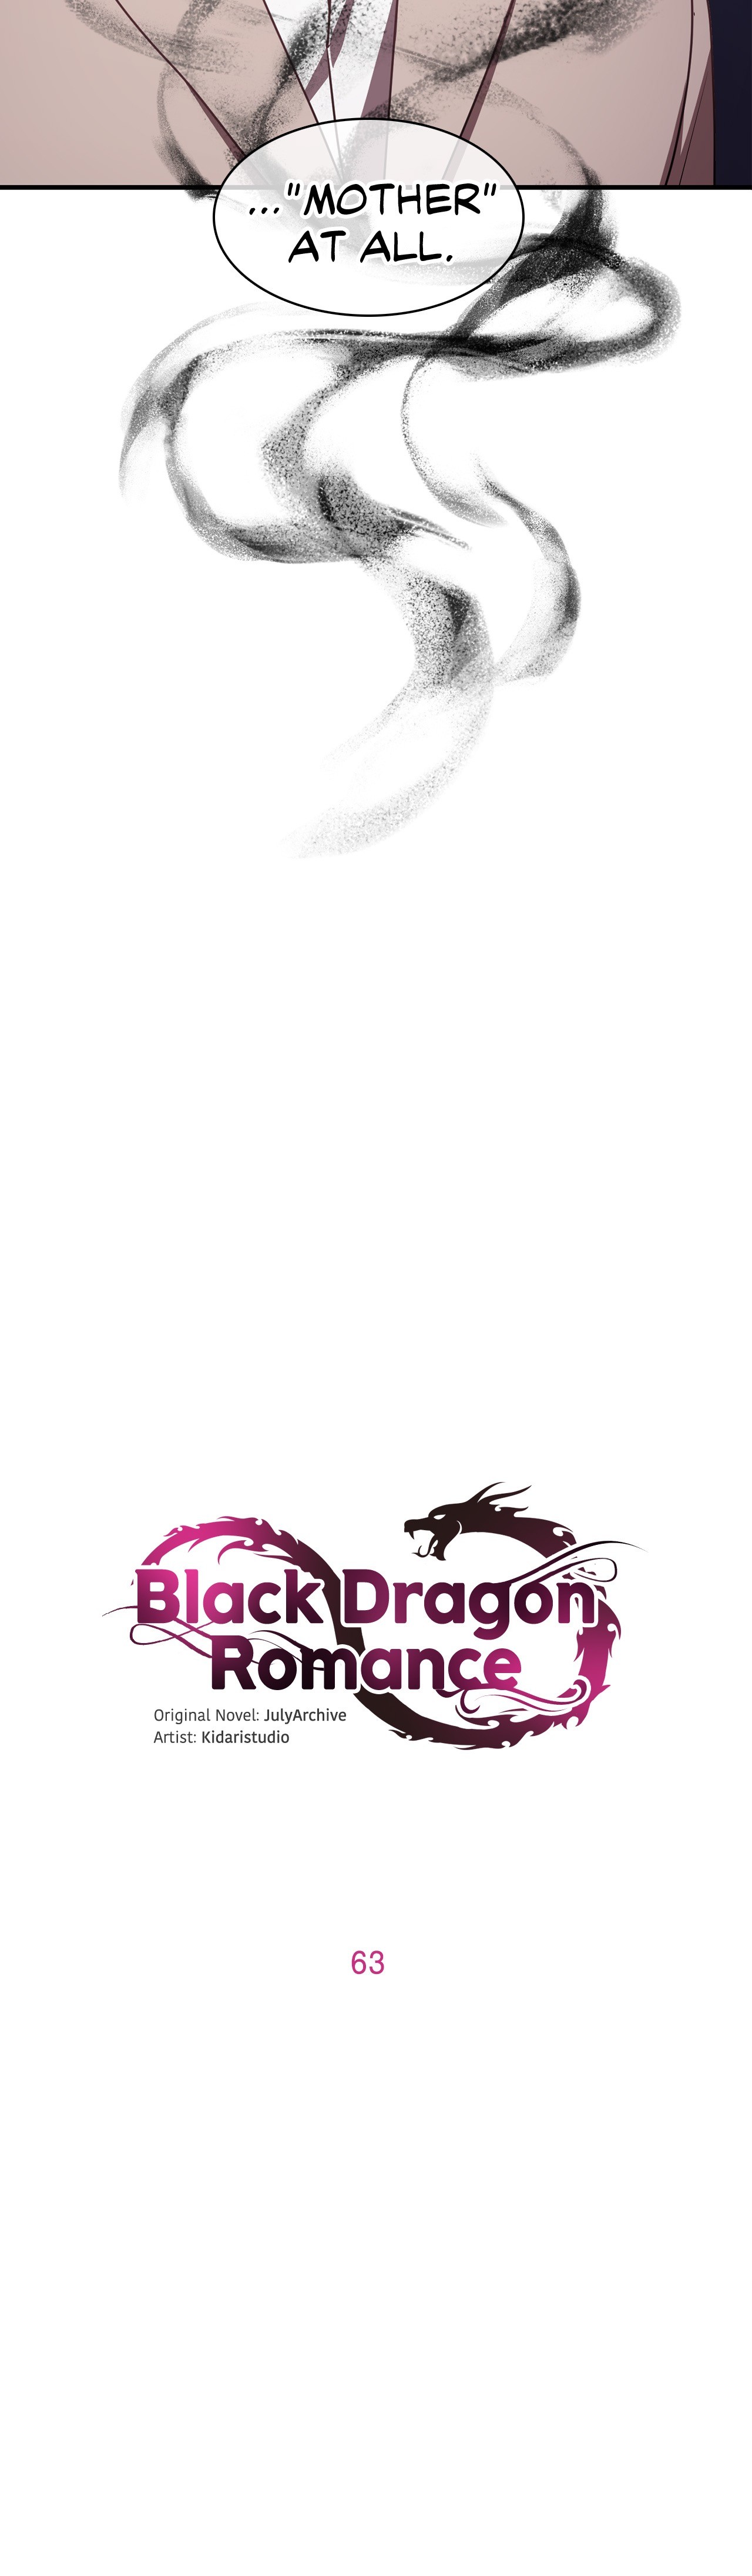 Black Dragon Romance image